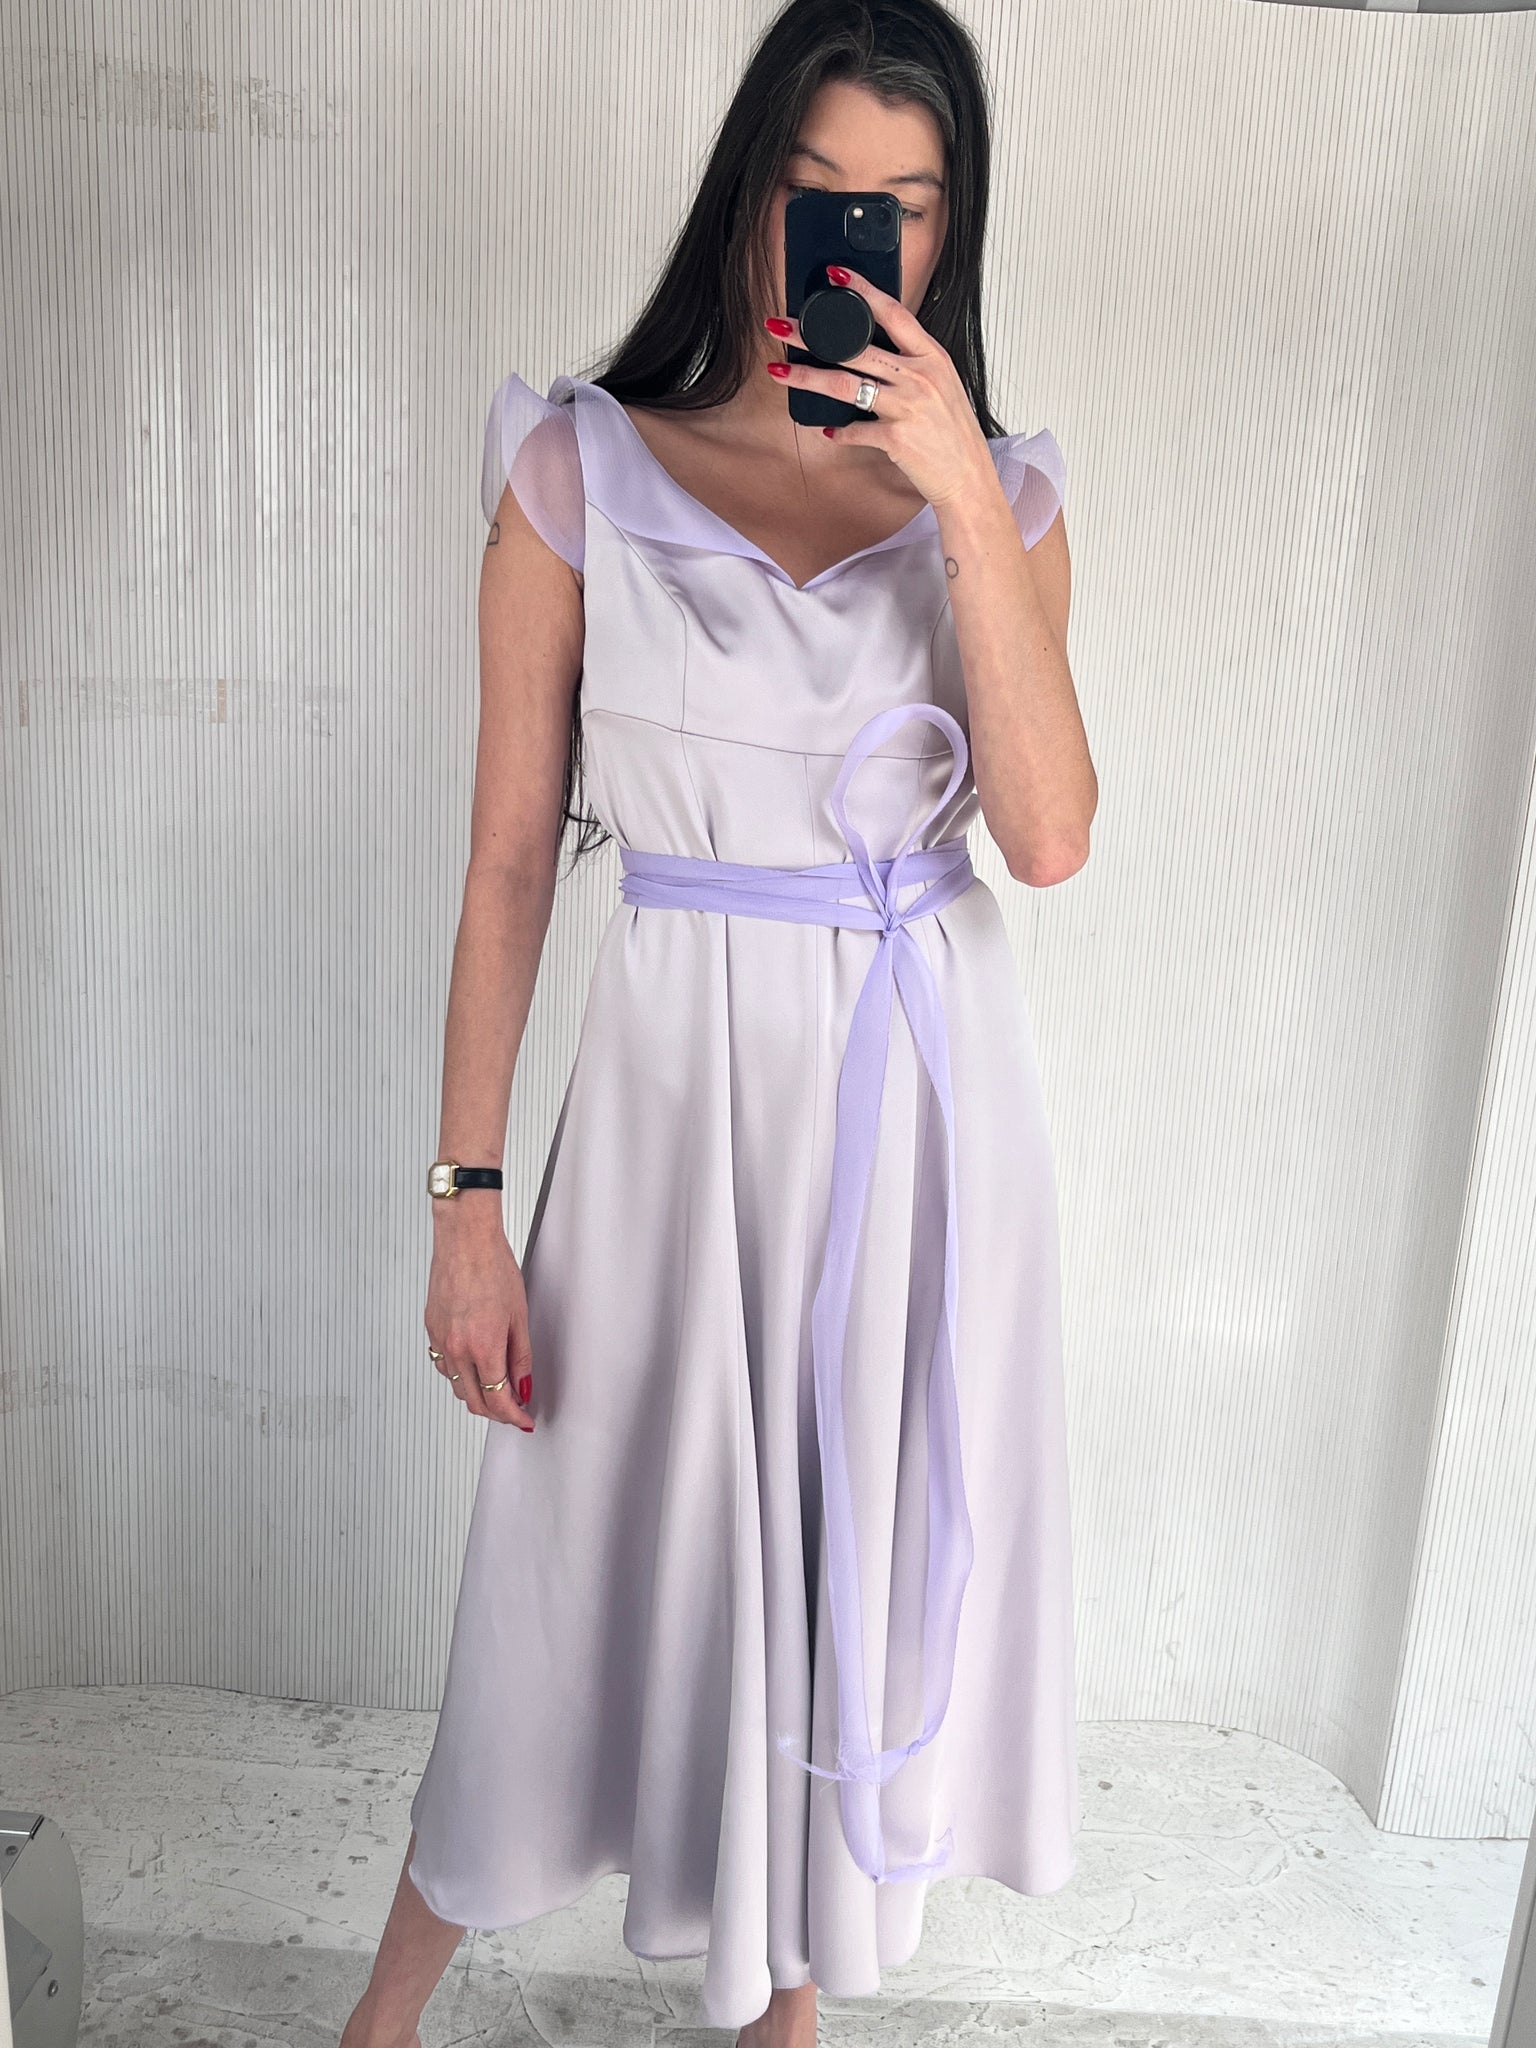 Armani Prive lavender dress